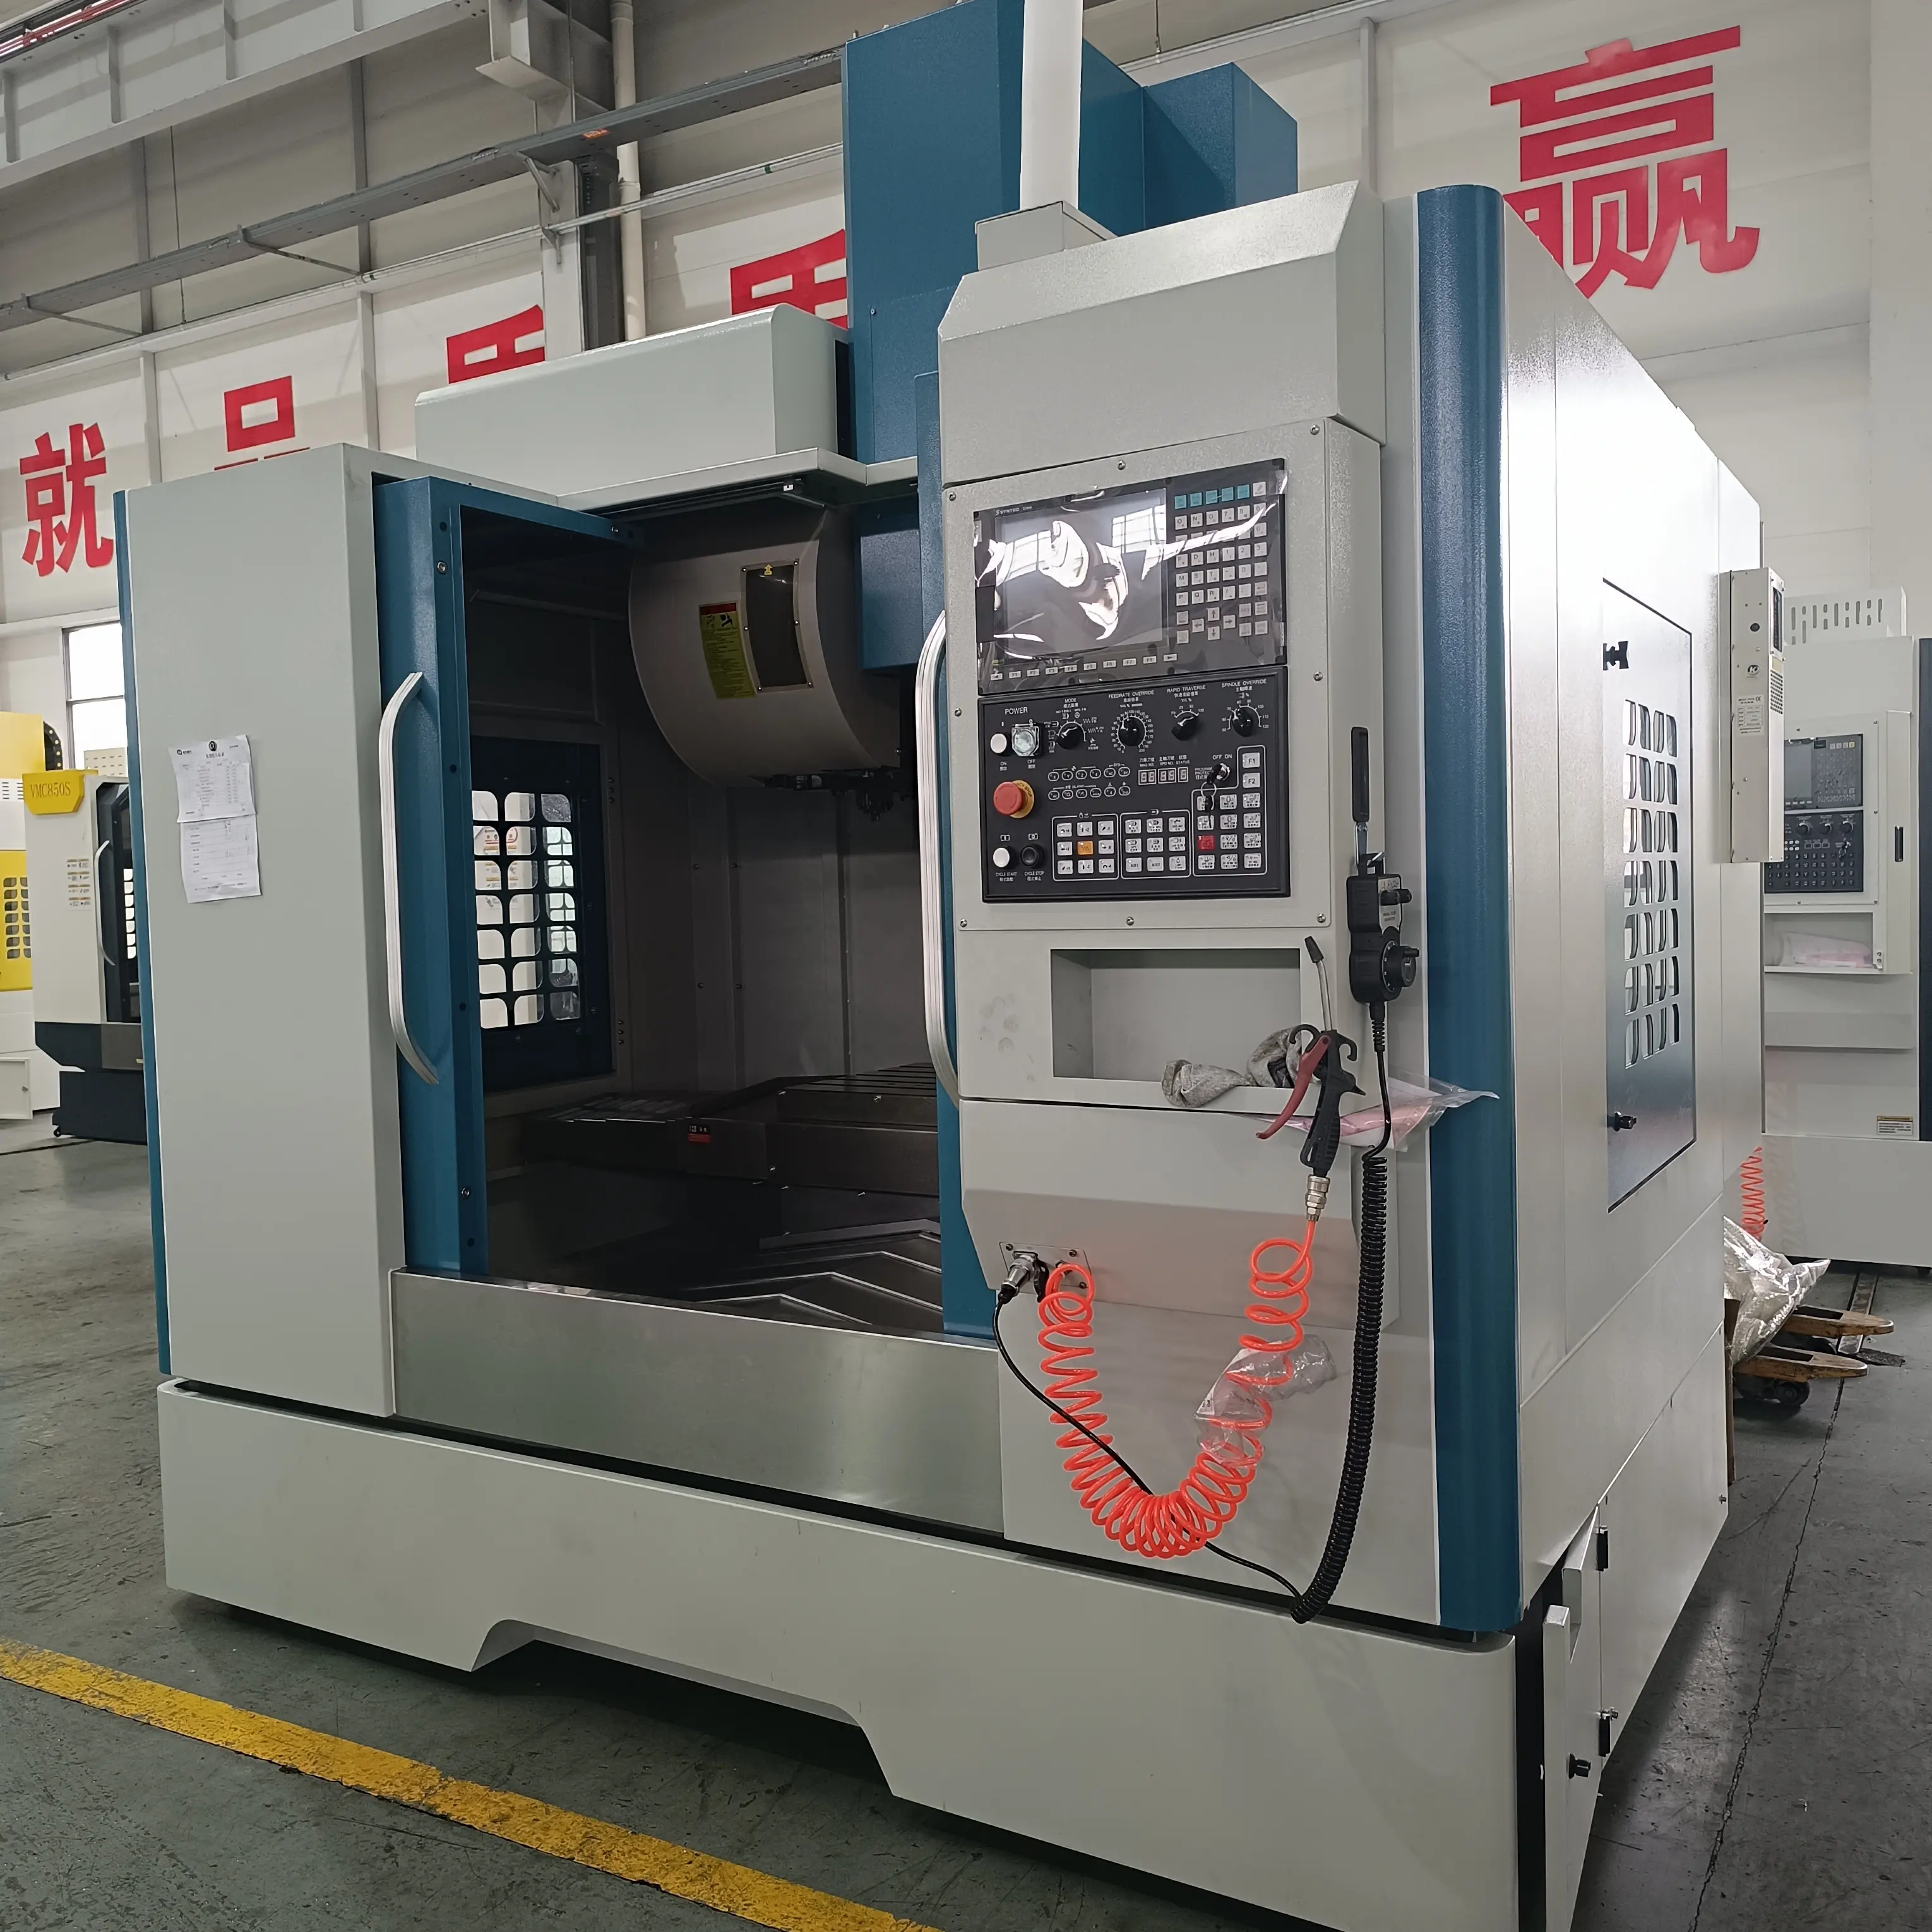 Shandong CNC станок завод VMC850 аппаратная резка и фрезерование